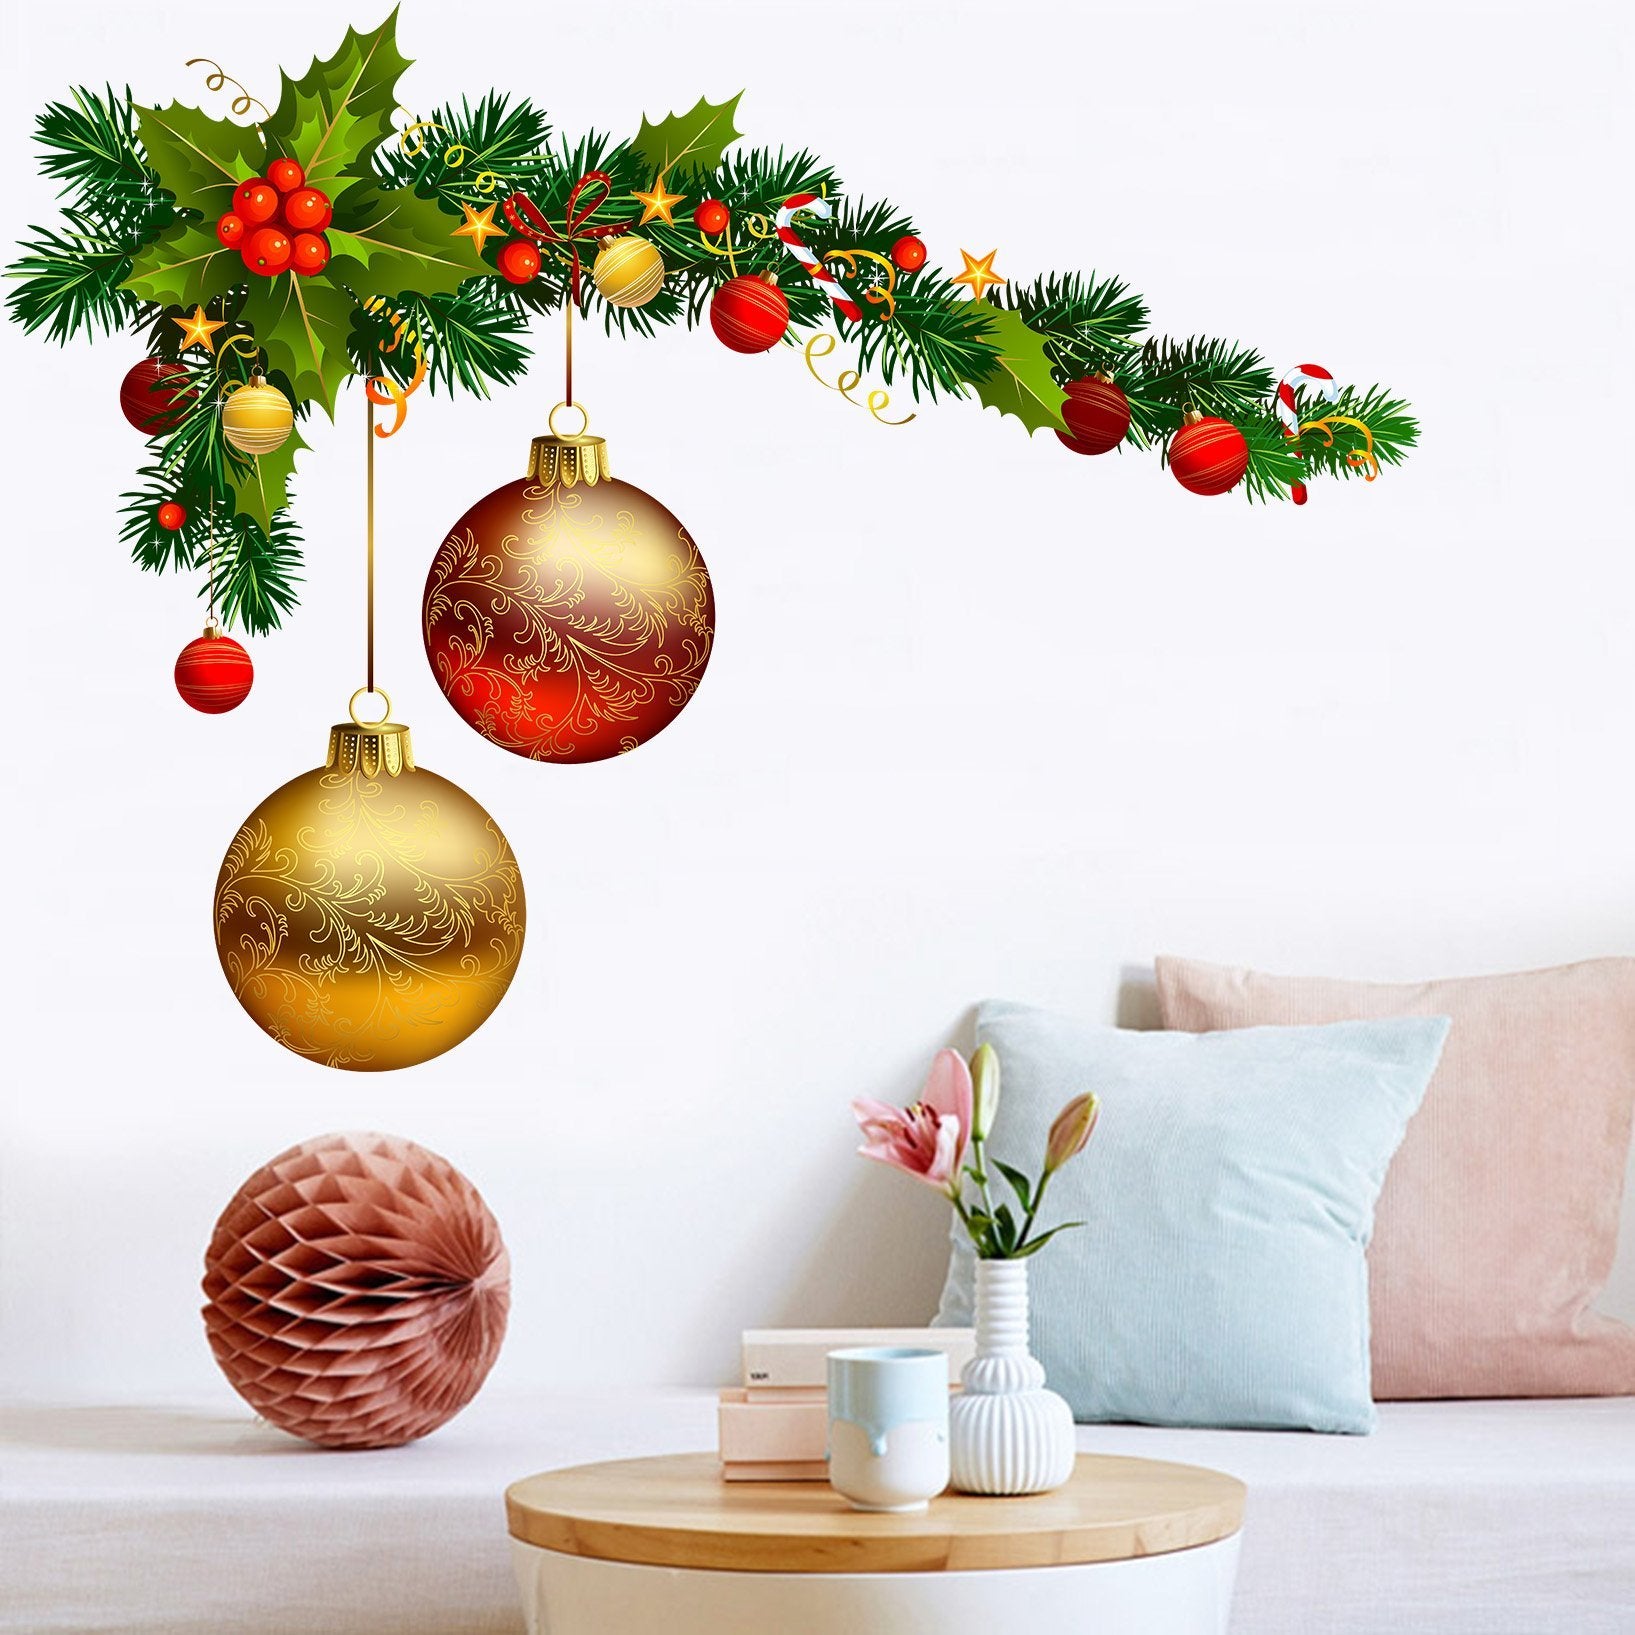 3D Decorative Ball Ornaments 24 Wall Stickers